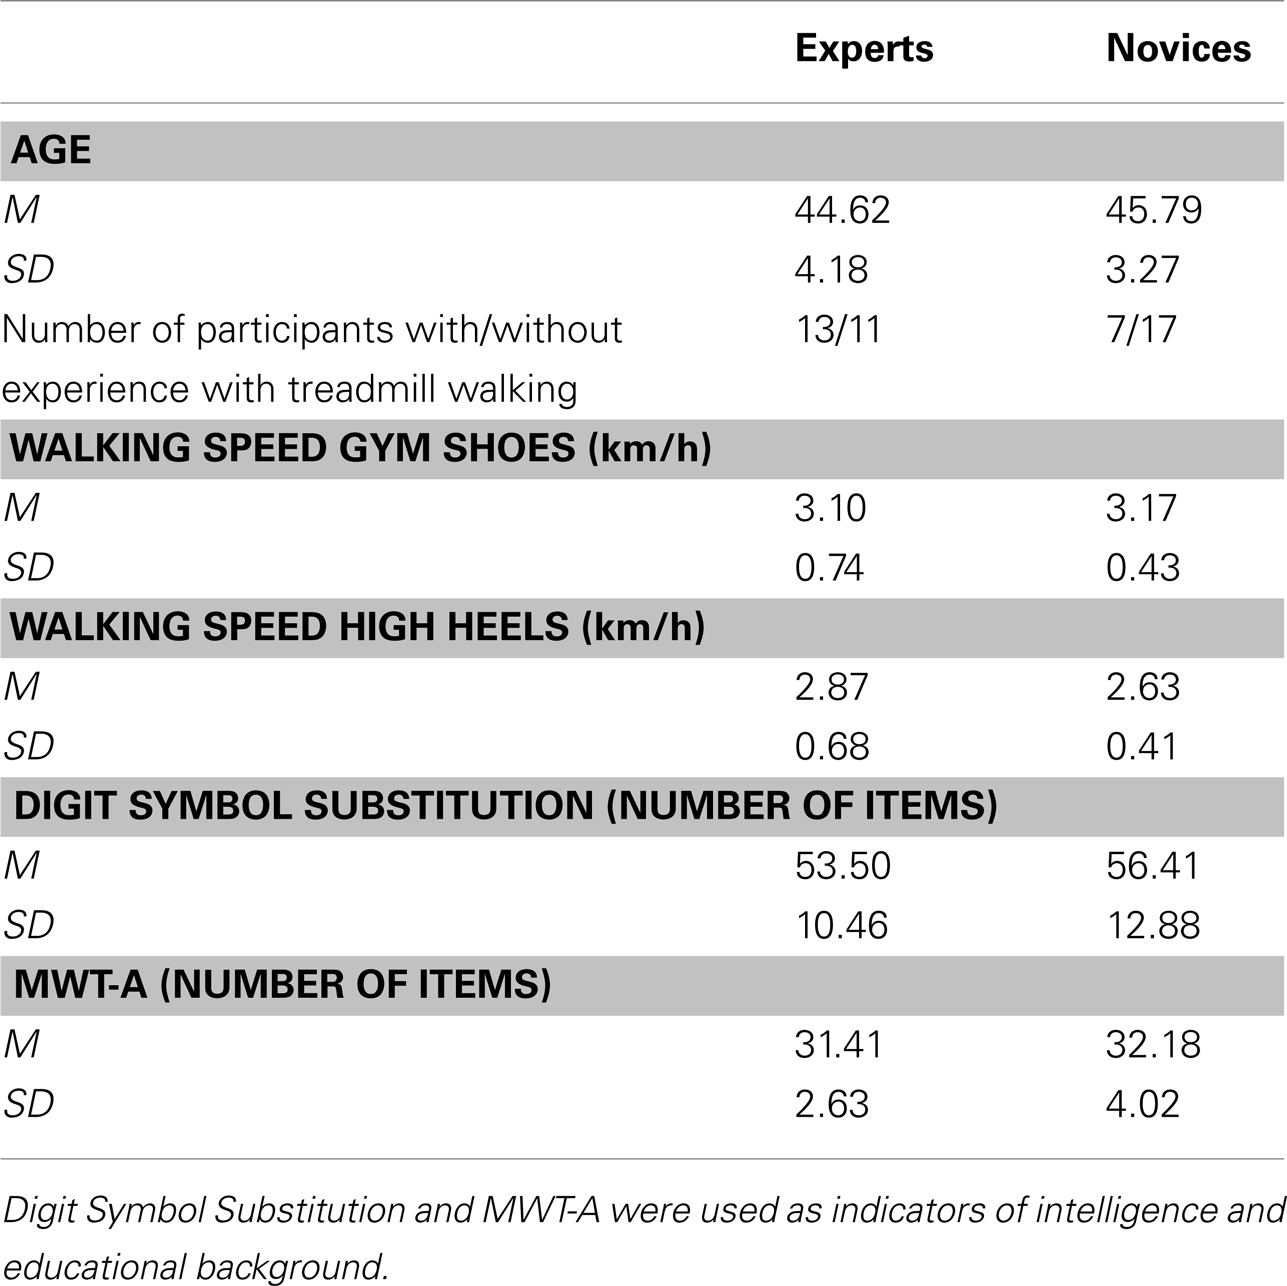 High heels improve walking efficiency, study finds - The